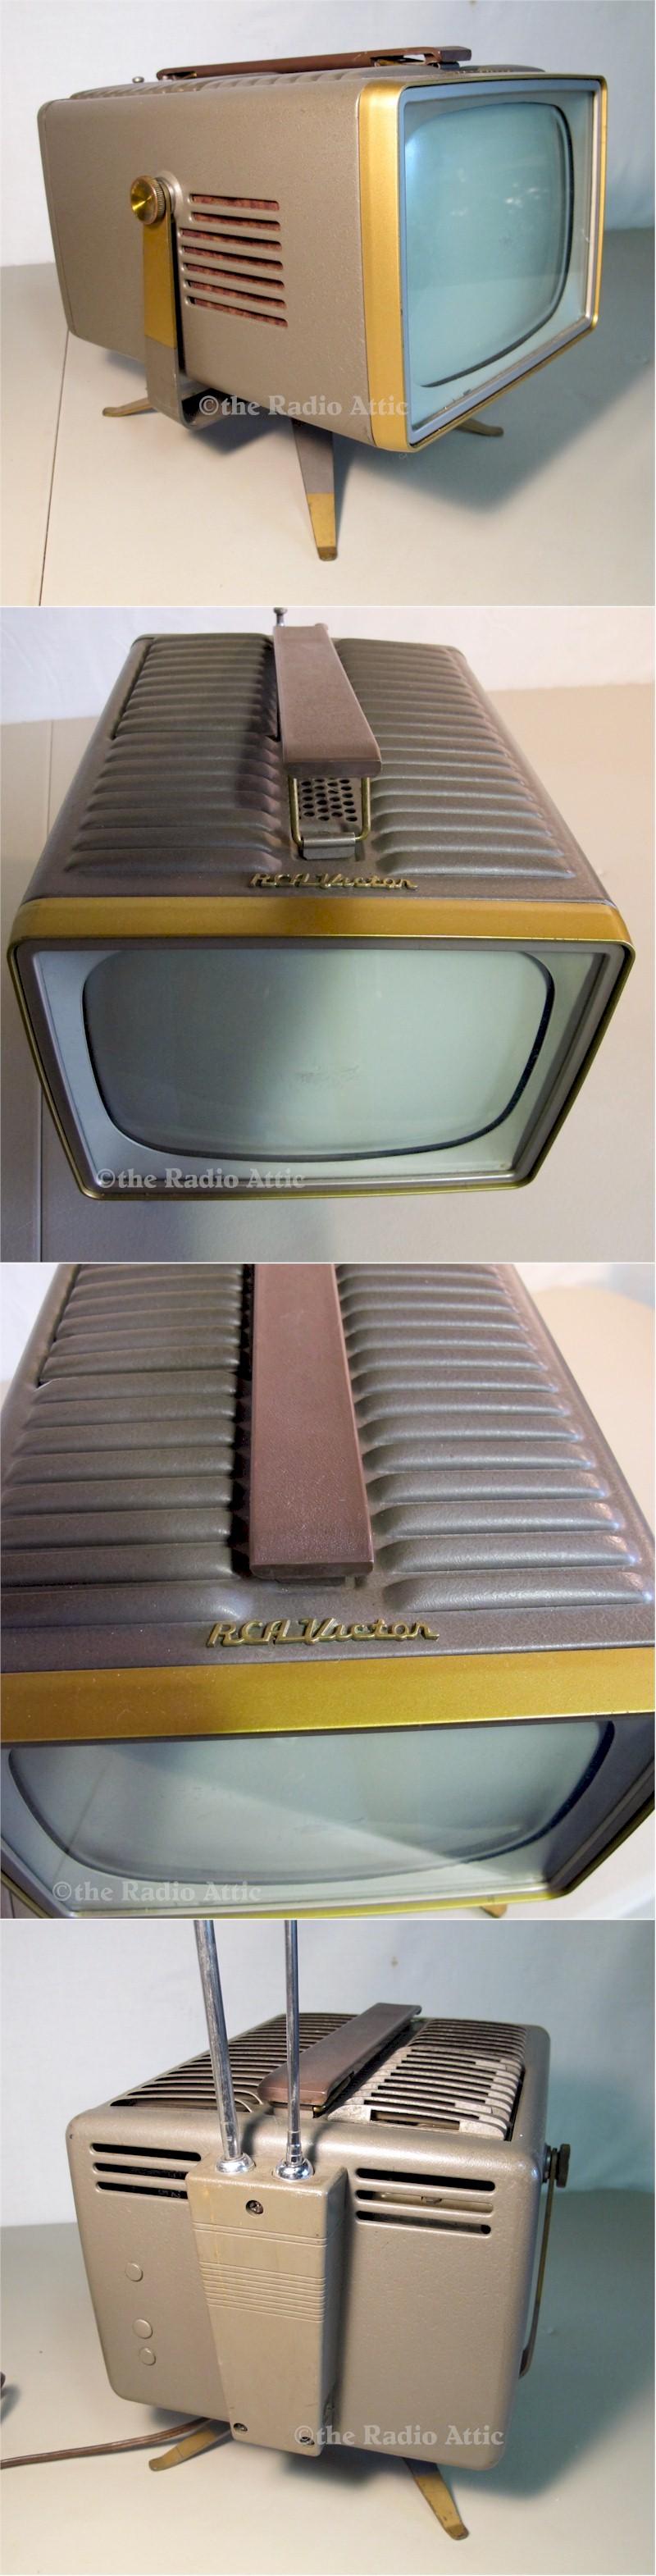 RCA 8-PT-703 Portable Television (1956)